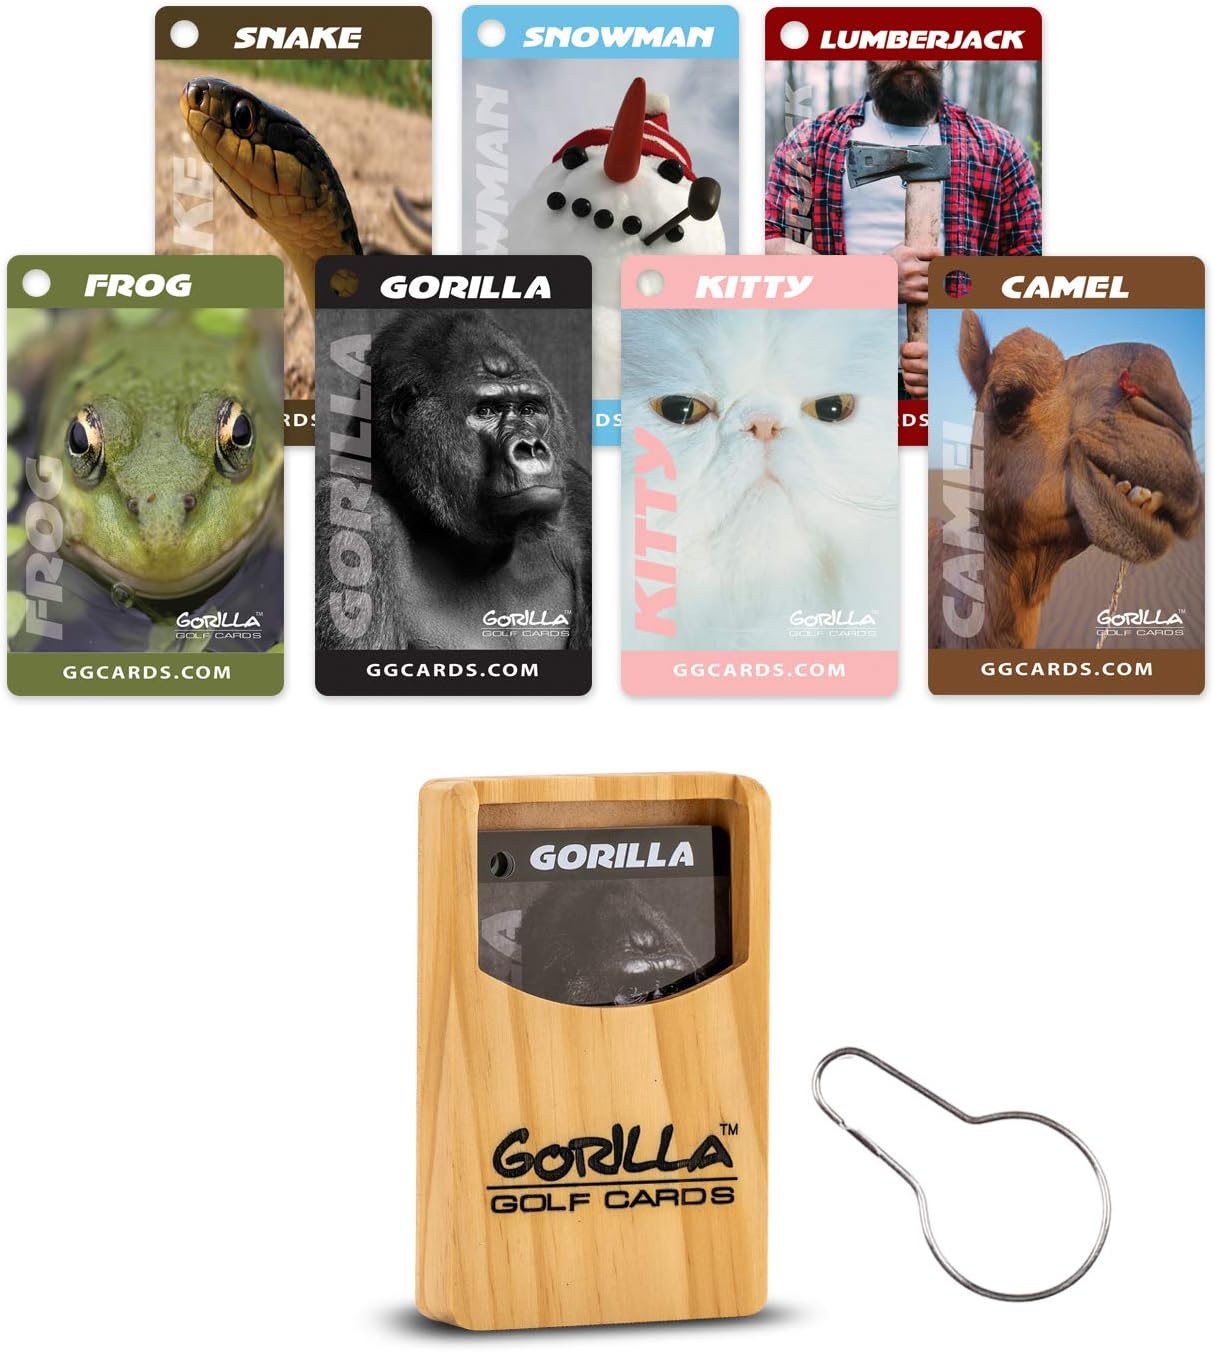 Gorilla Golf Cards